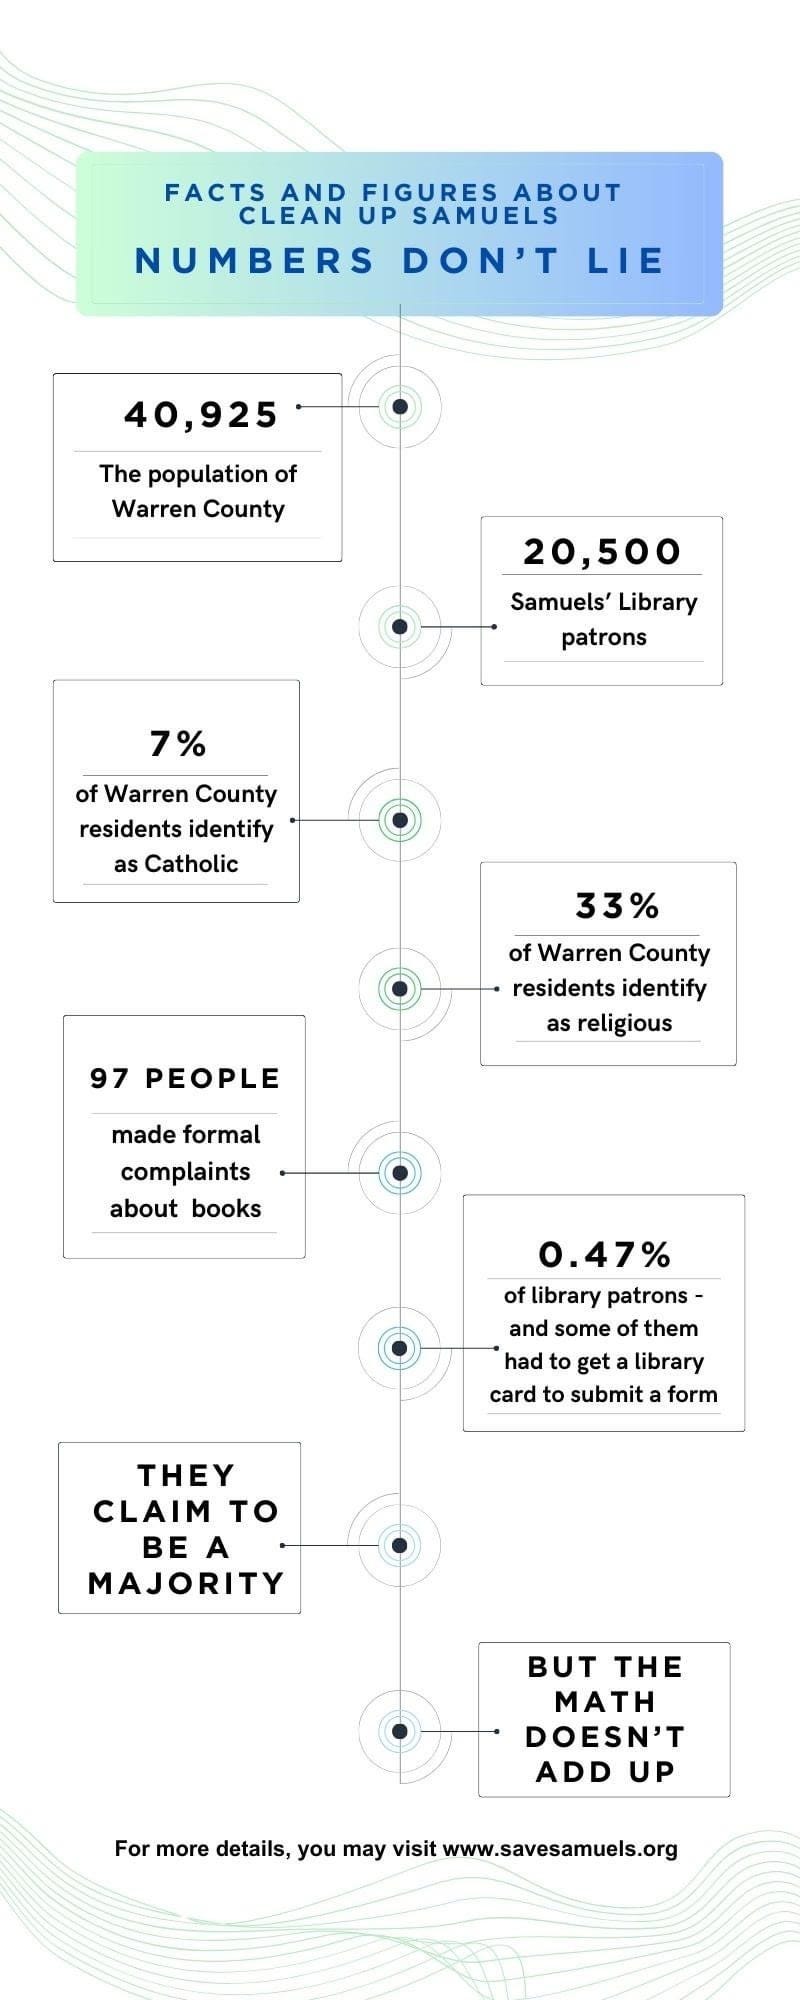 Statistics about Samuels Library via the Save Samuels website. 